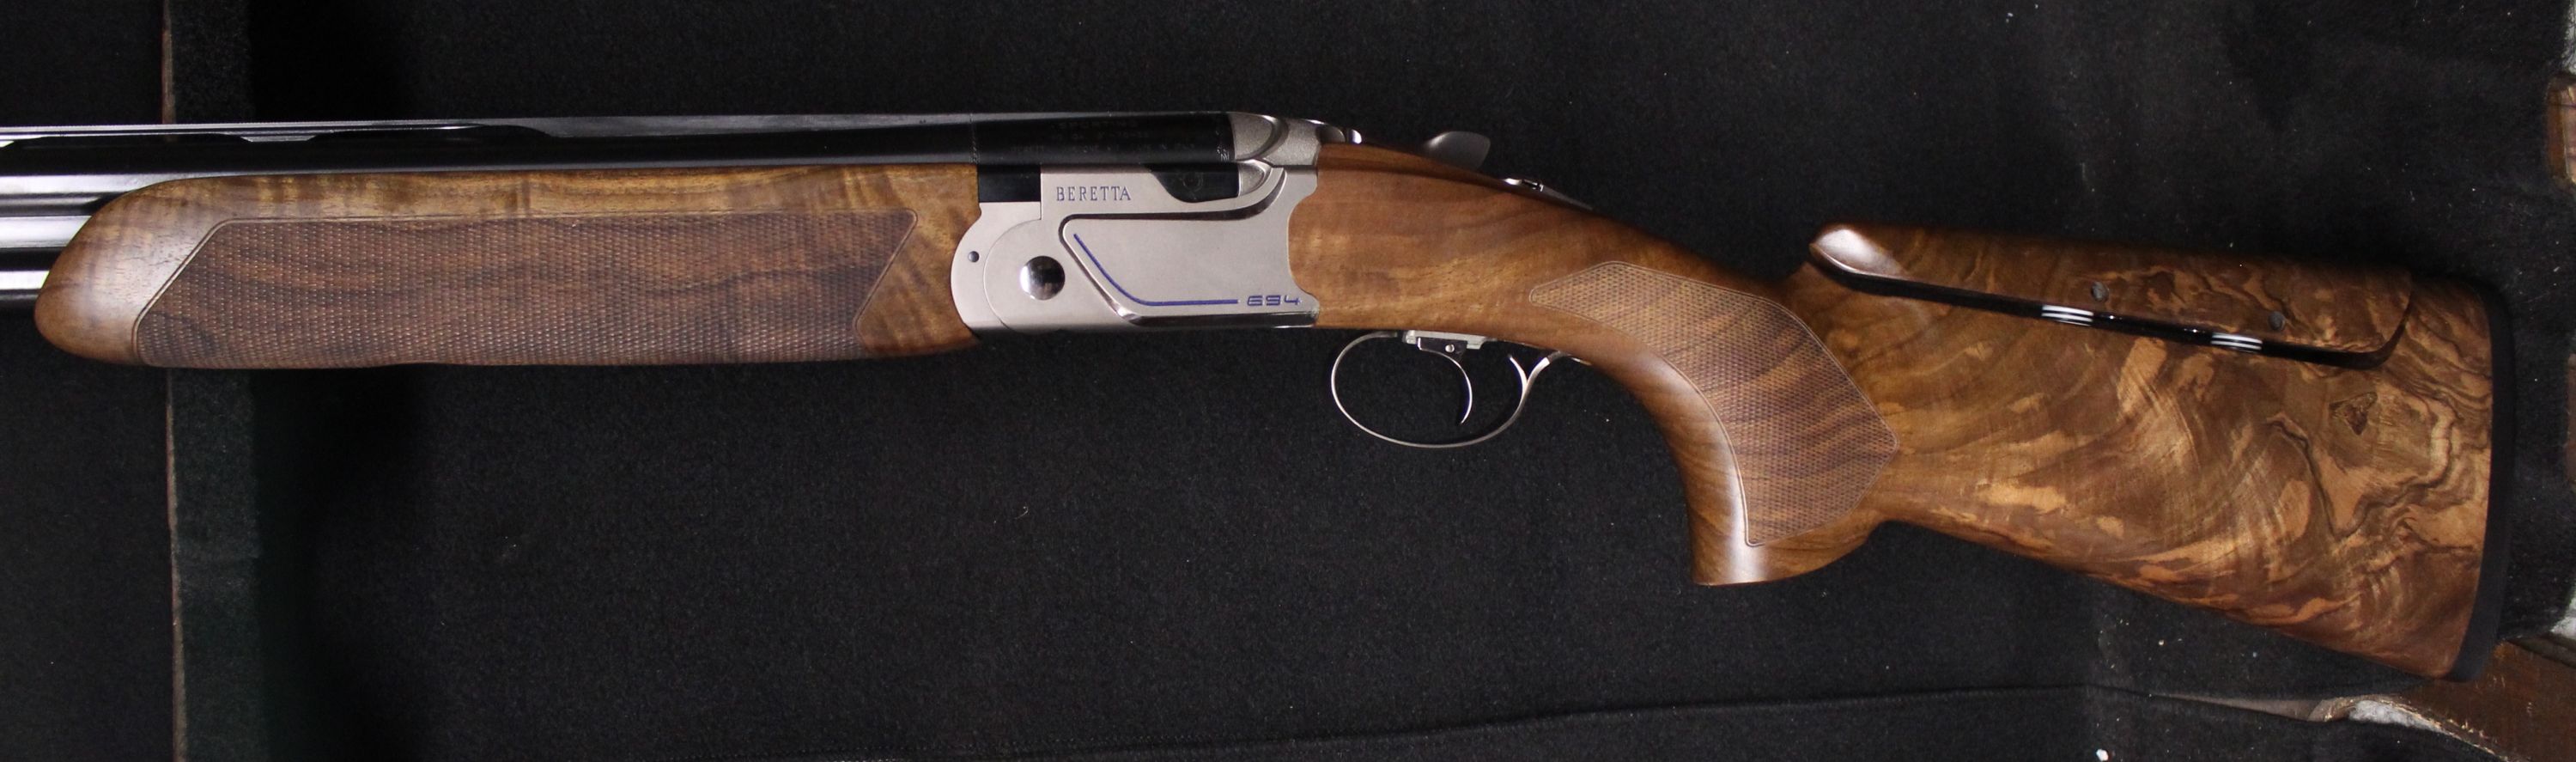  694 Sporting New Beretta Shotguns Online Inventory Joel Etchen 